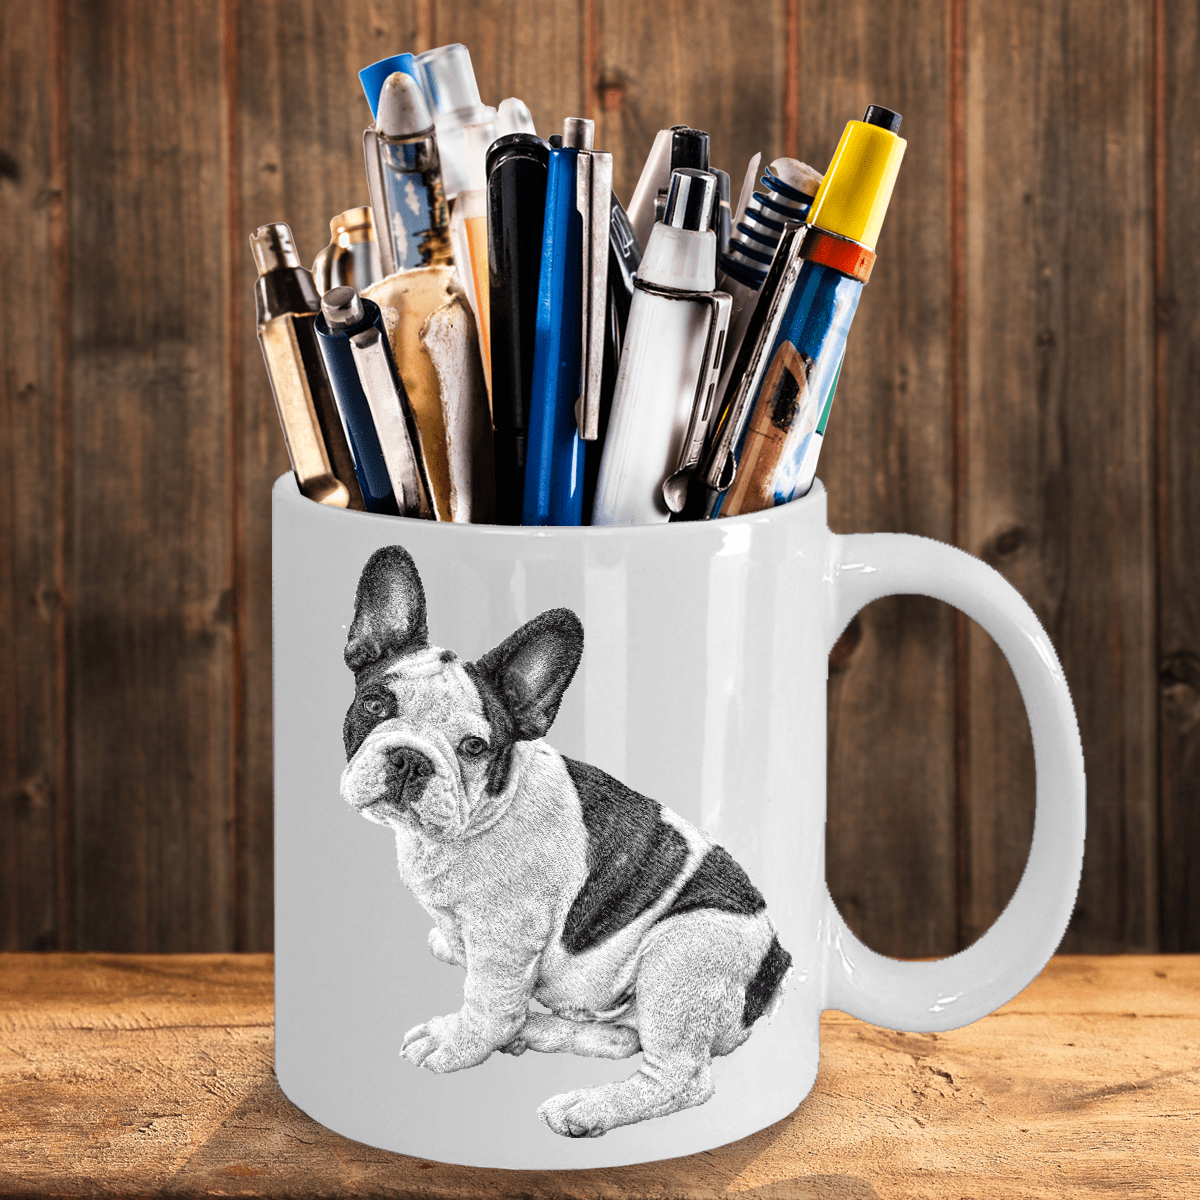 French Bulldog Ceramic Mug